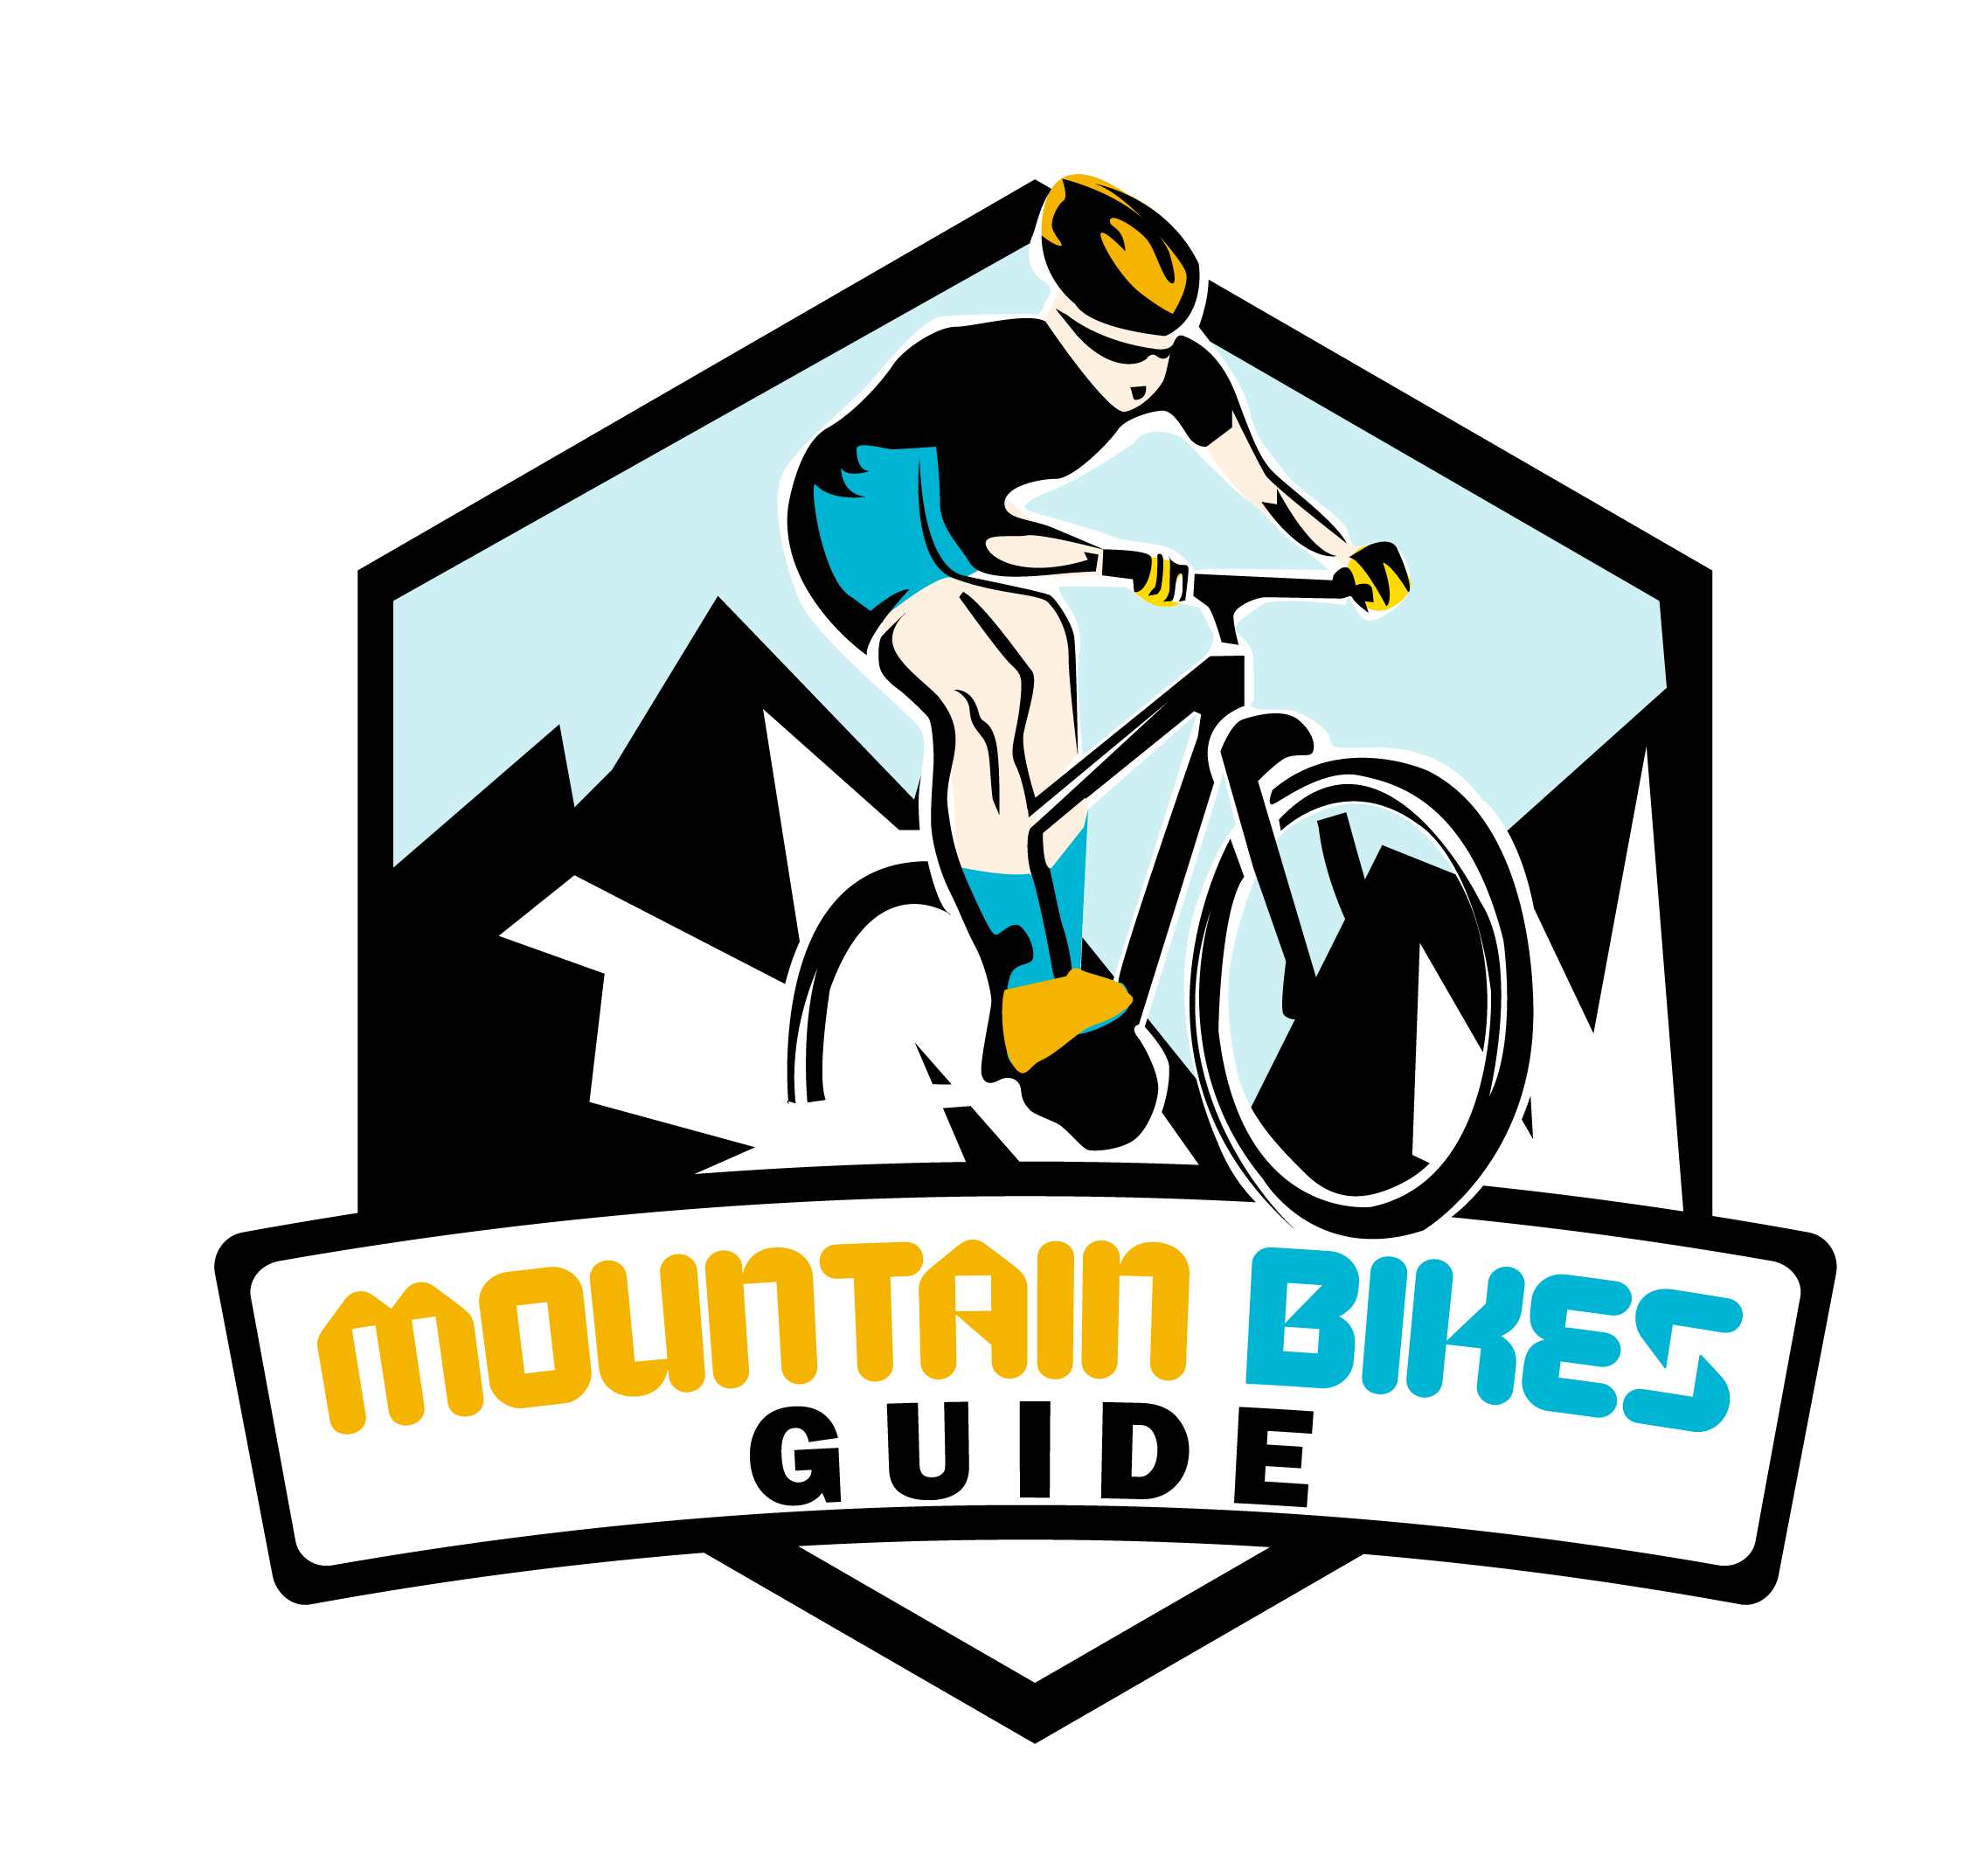 Mountain Bikes Guide - Building (2254x2146)